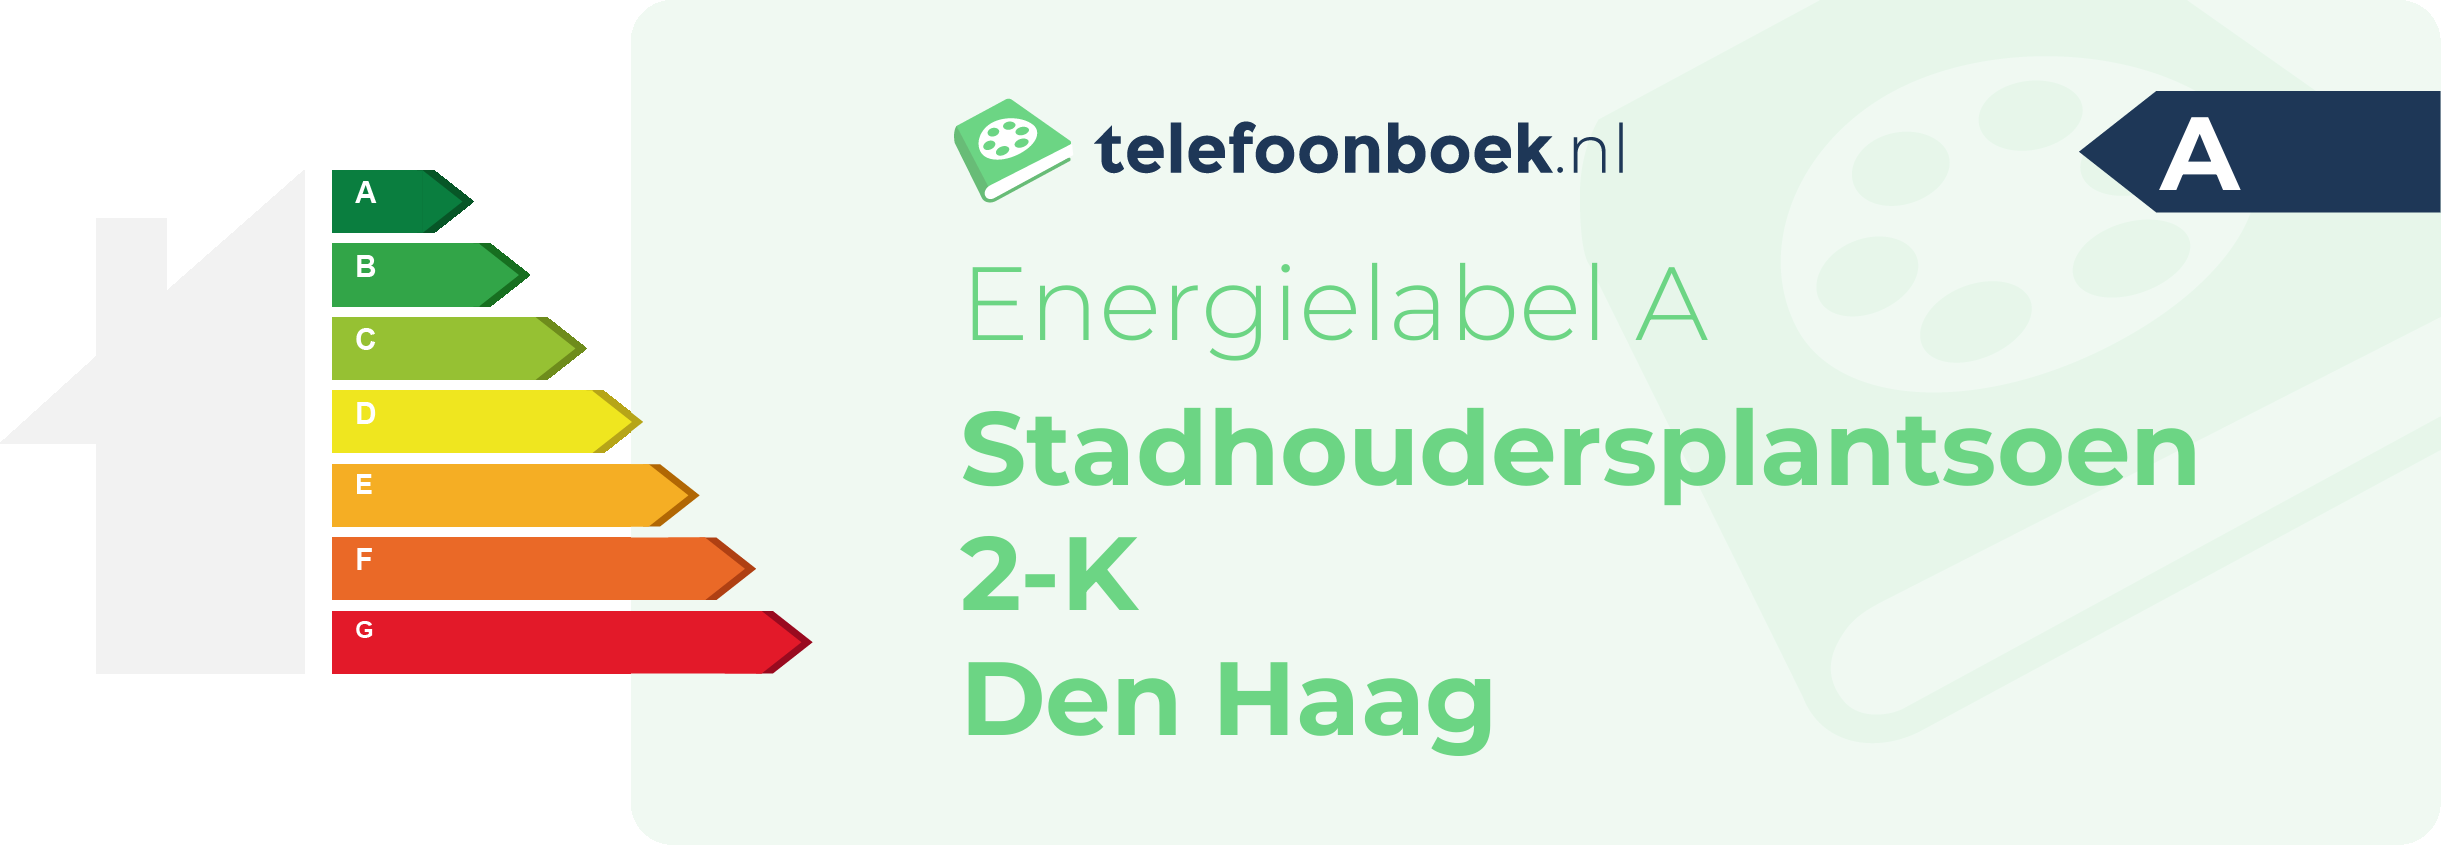 Energielabel Stadhoudersplantsoen 2-K Den Haag